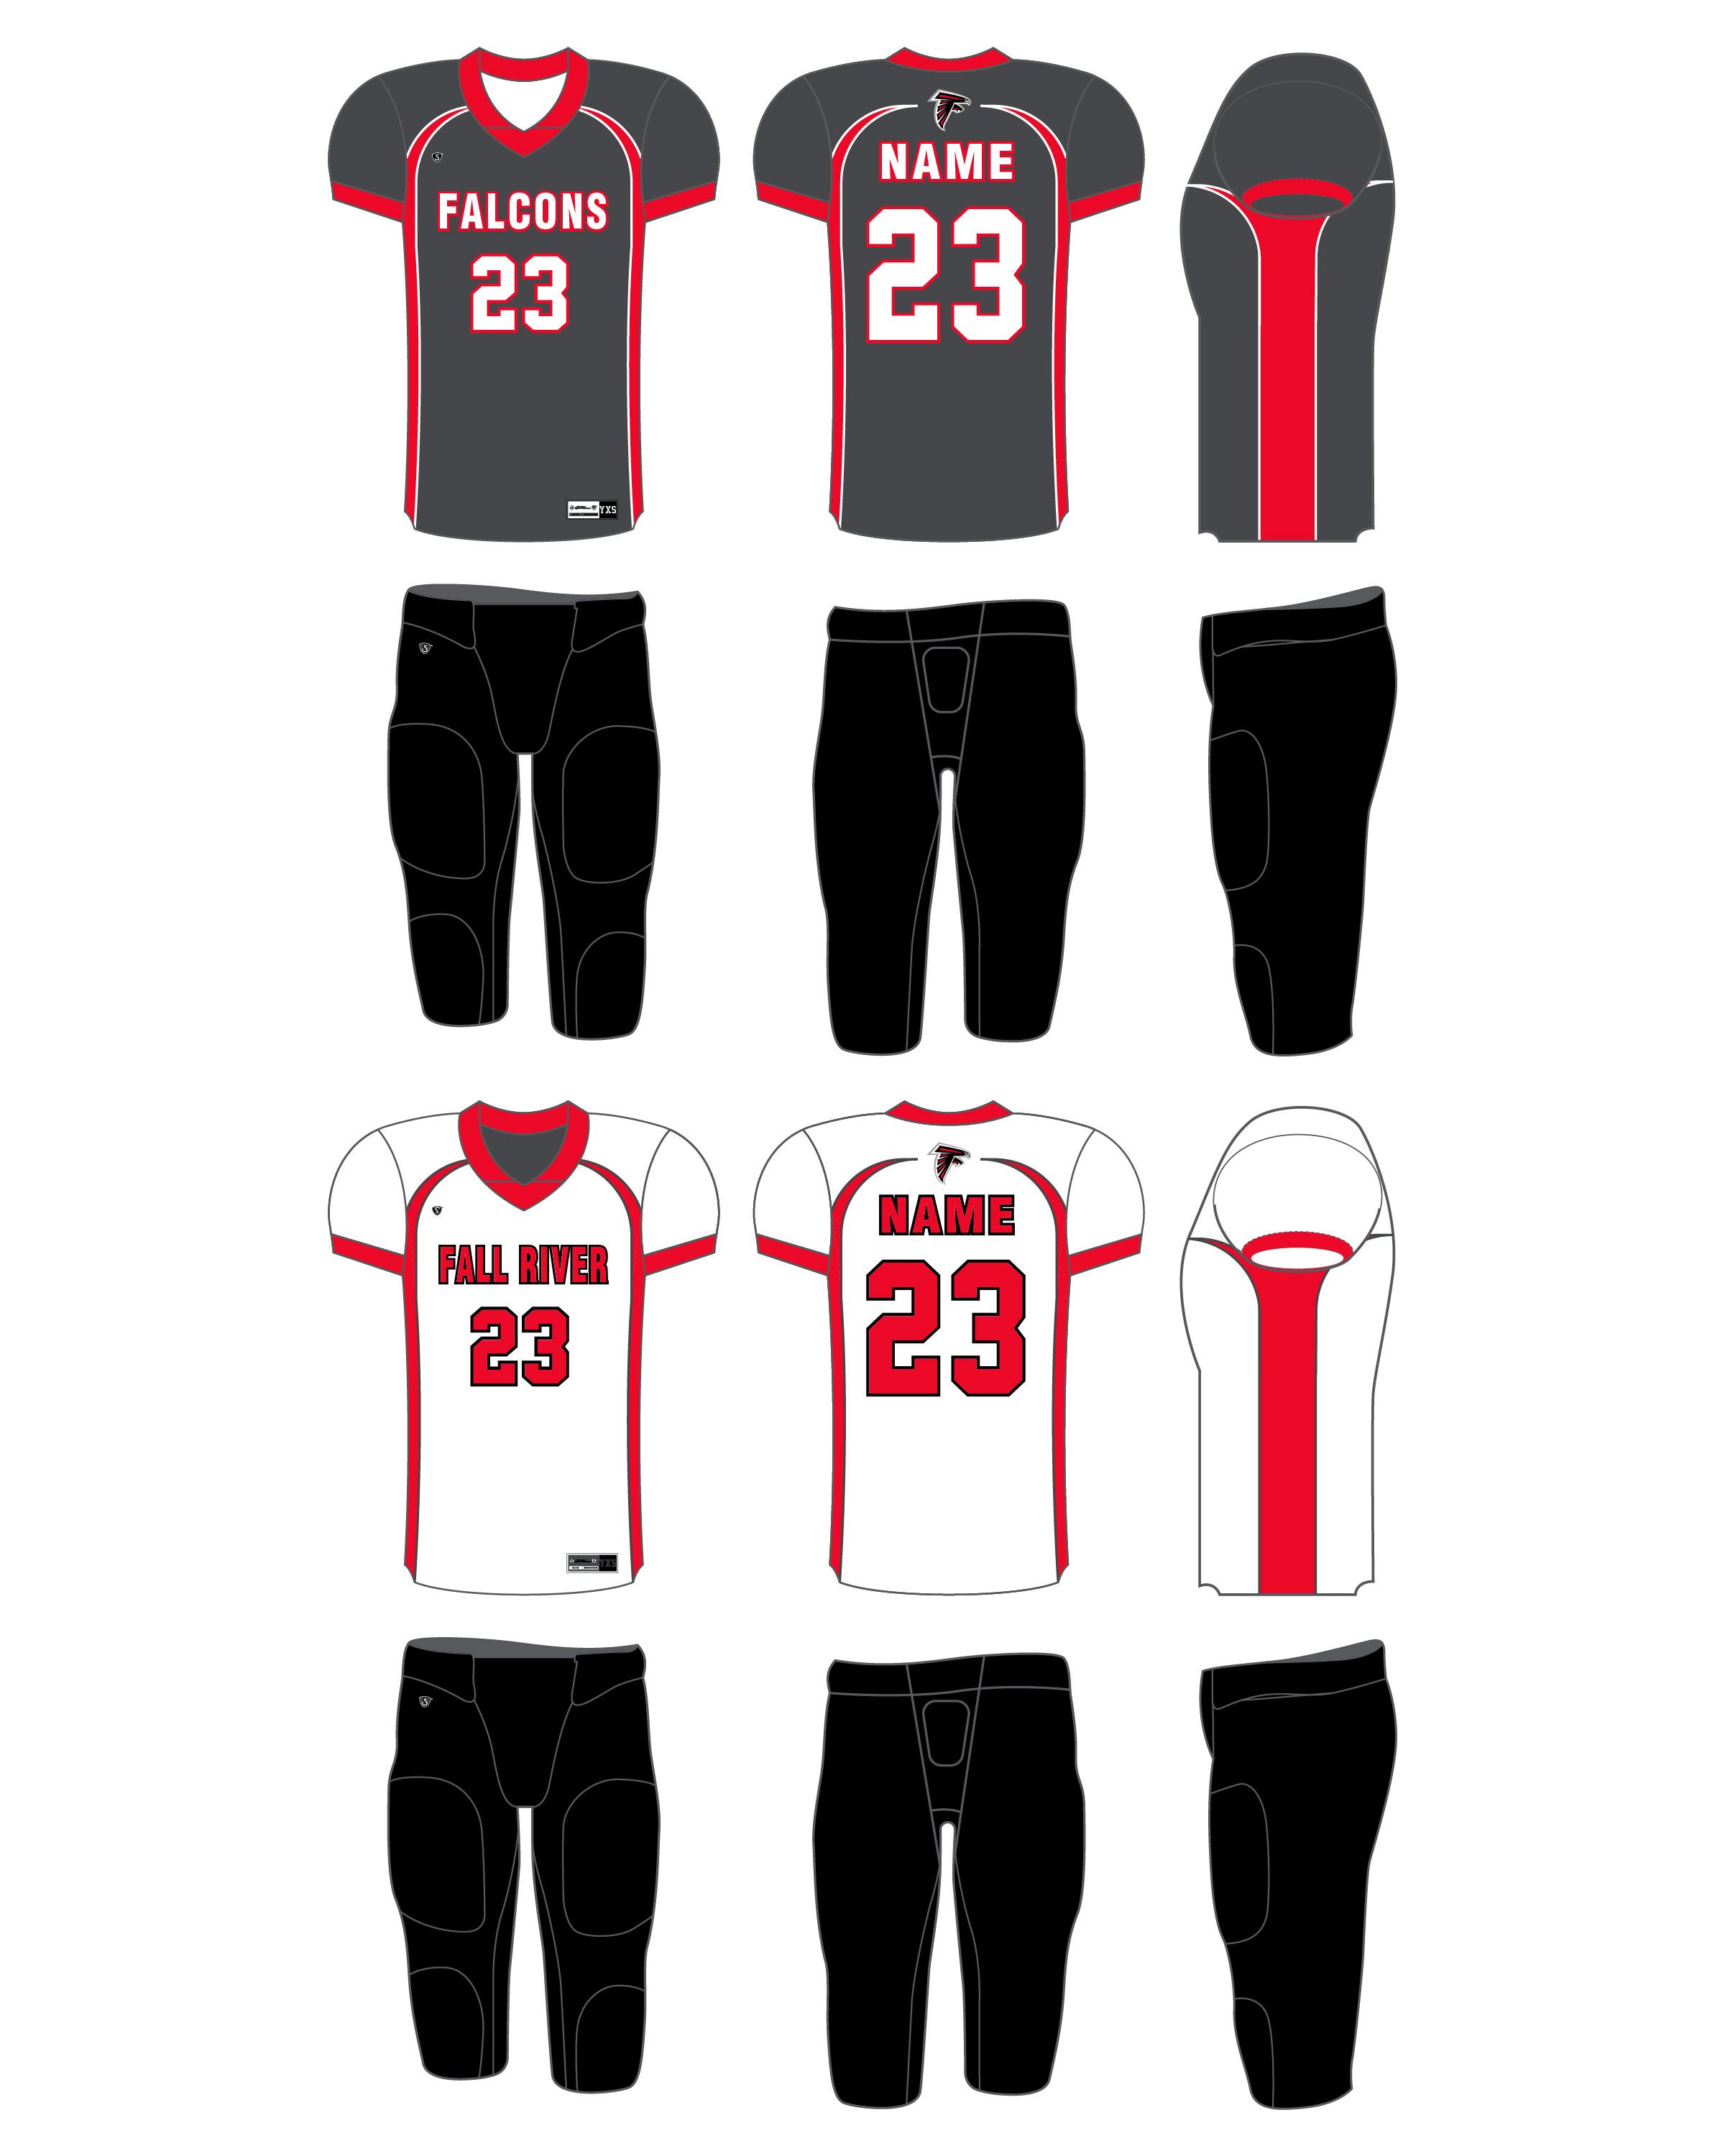 Custom Sublimated Football Uniform - Fall River 4